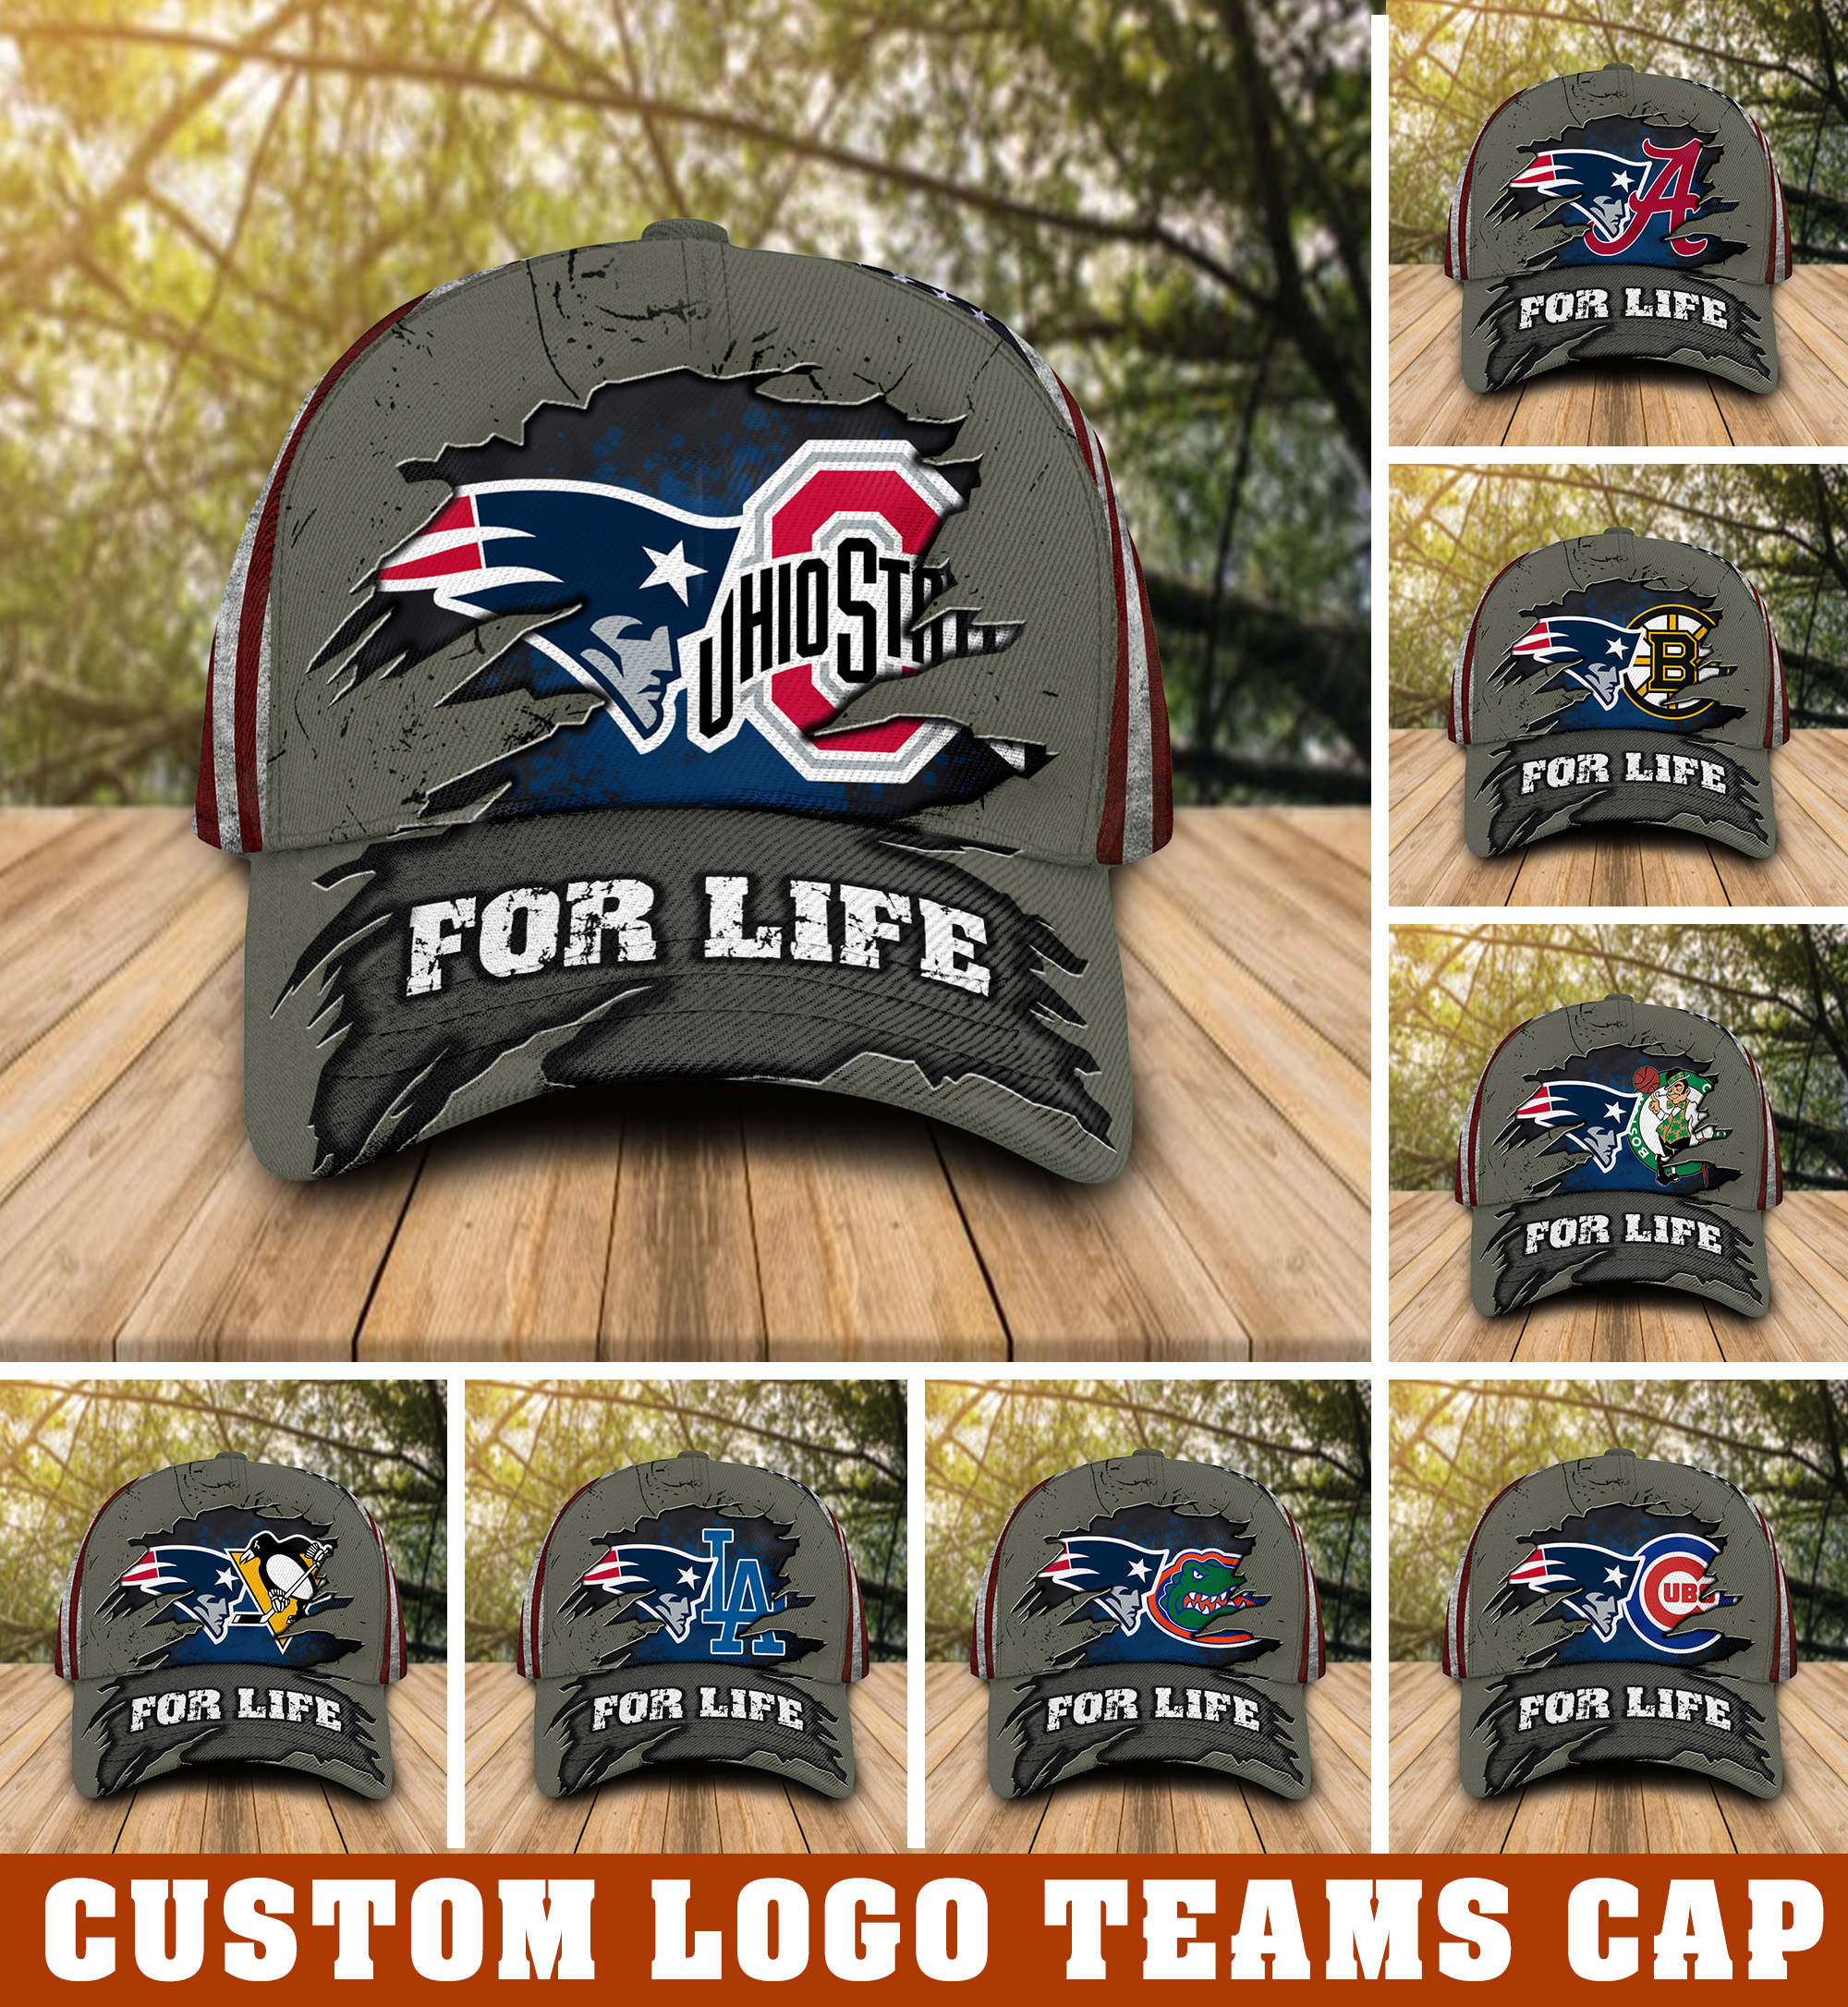 Custom logo Sport teams For Life Cap